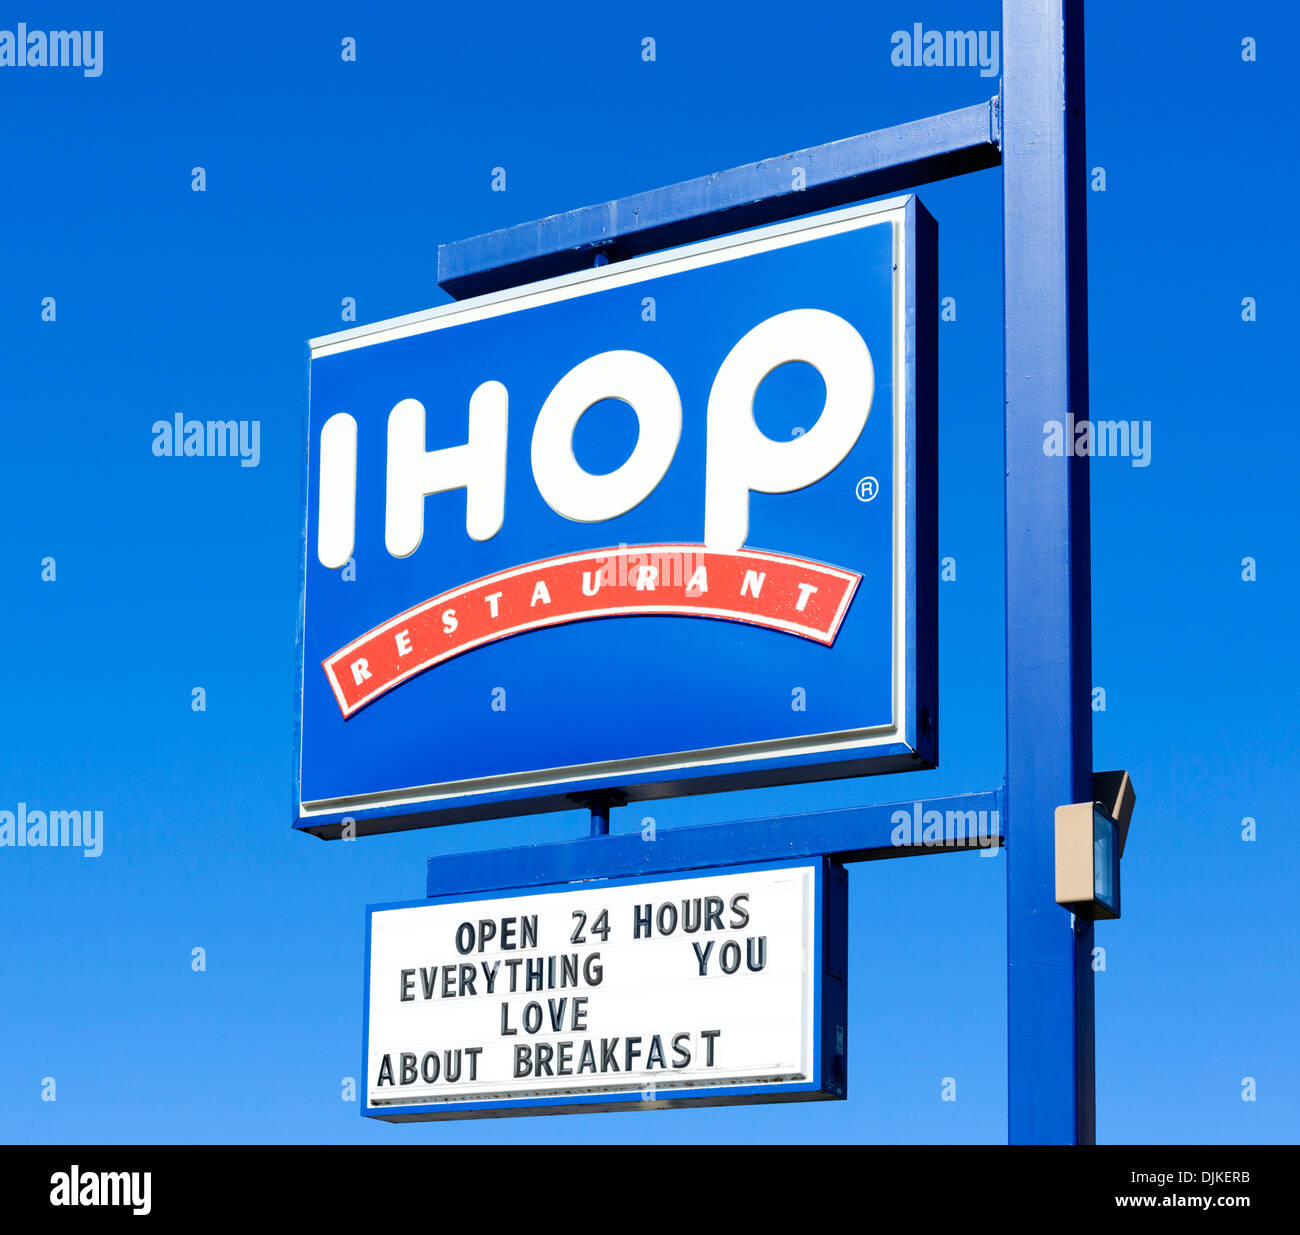 iHop restaurant sign, Los Angeles Stock Photo - Alamy